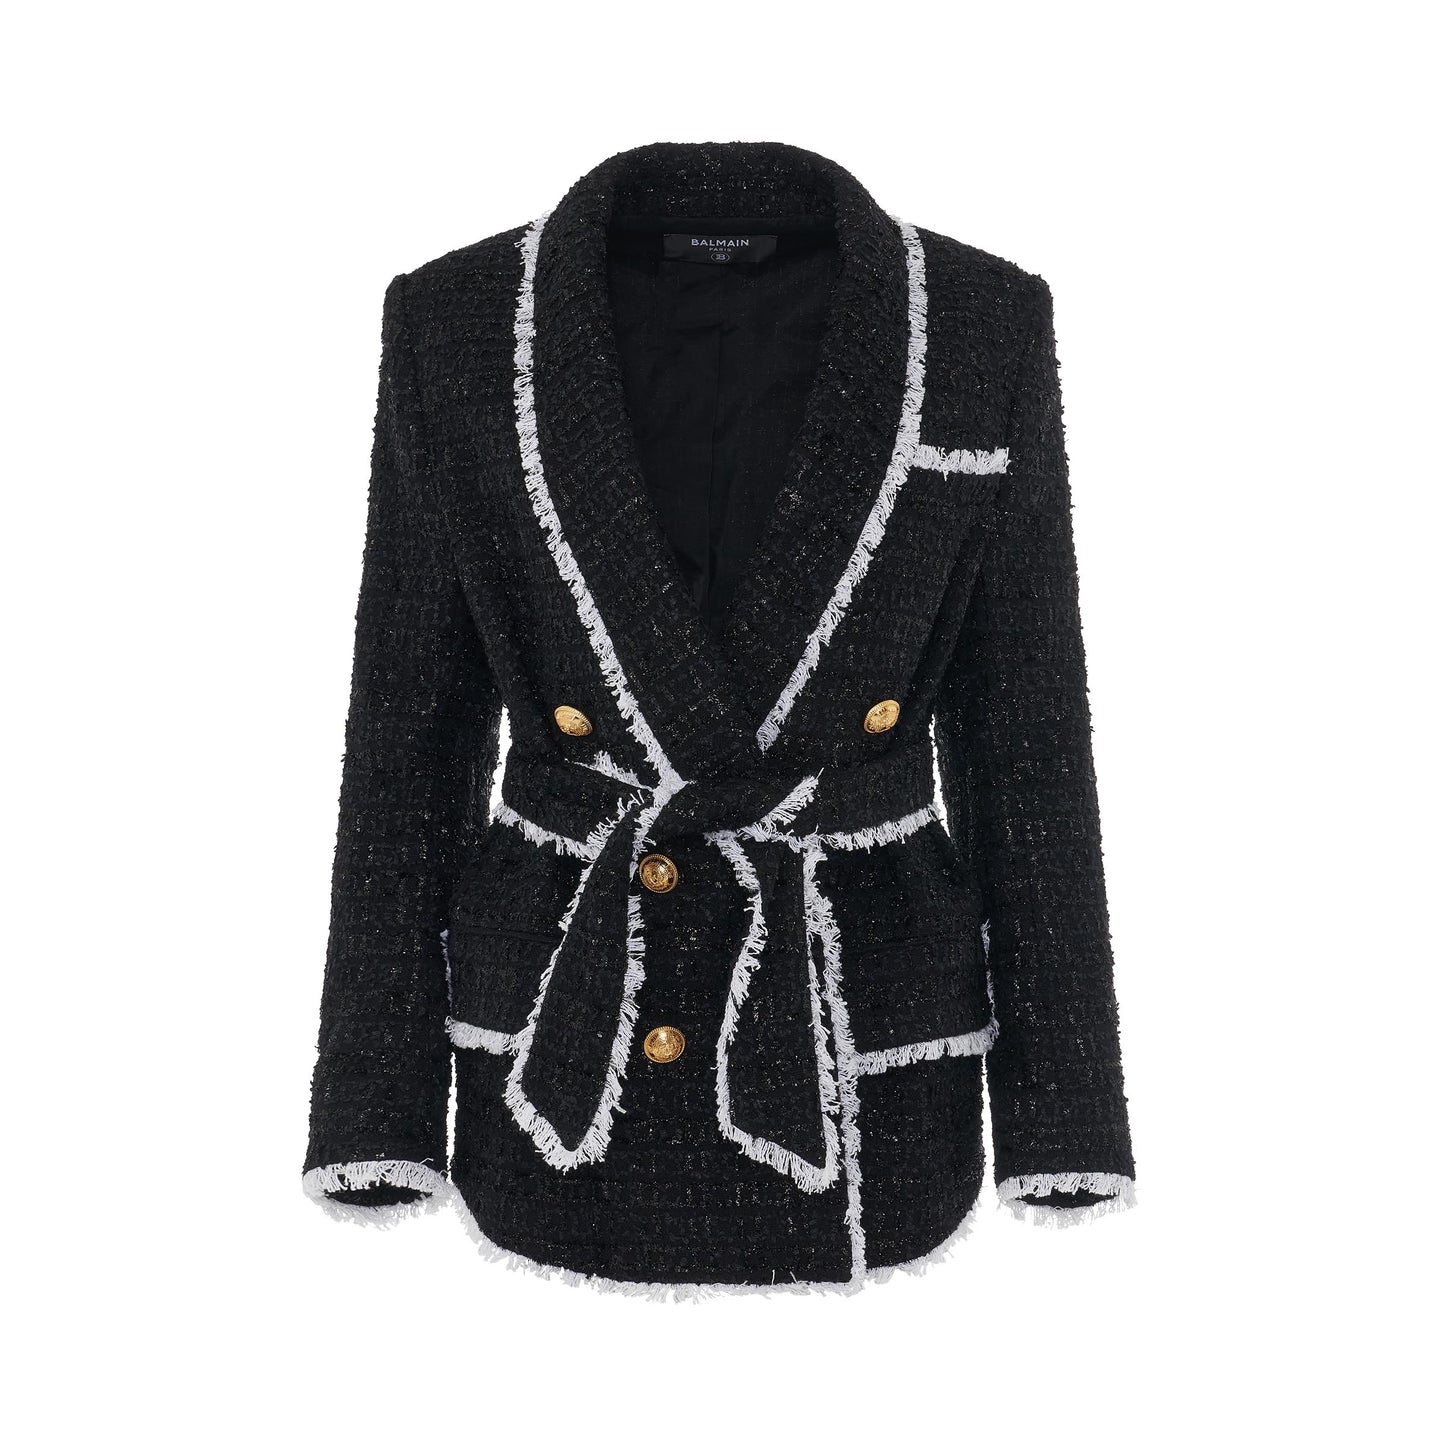 Shawl Collar 6 Button Pyjama Tweed Jacket in Black/White